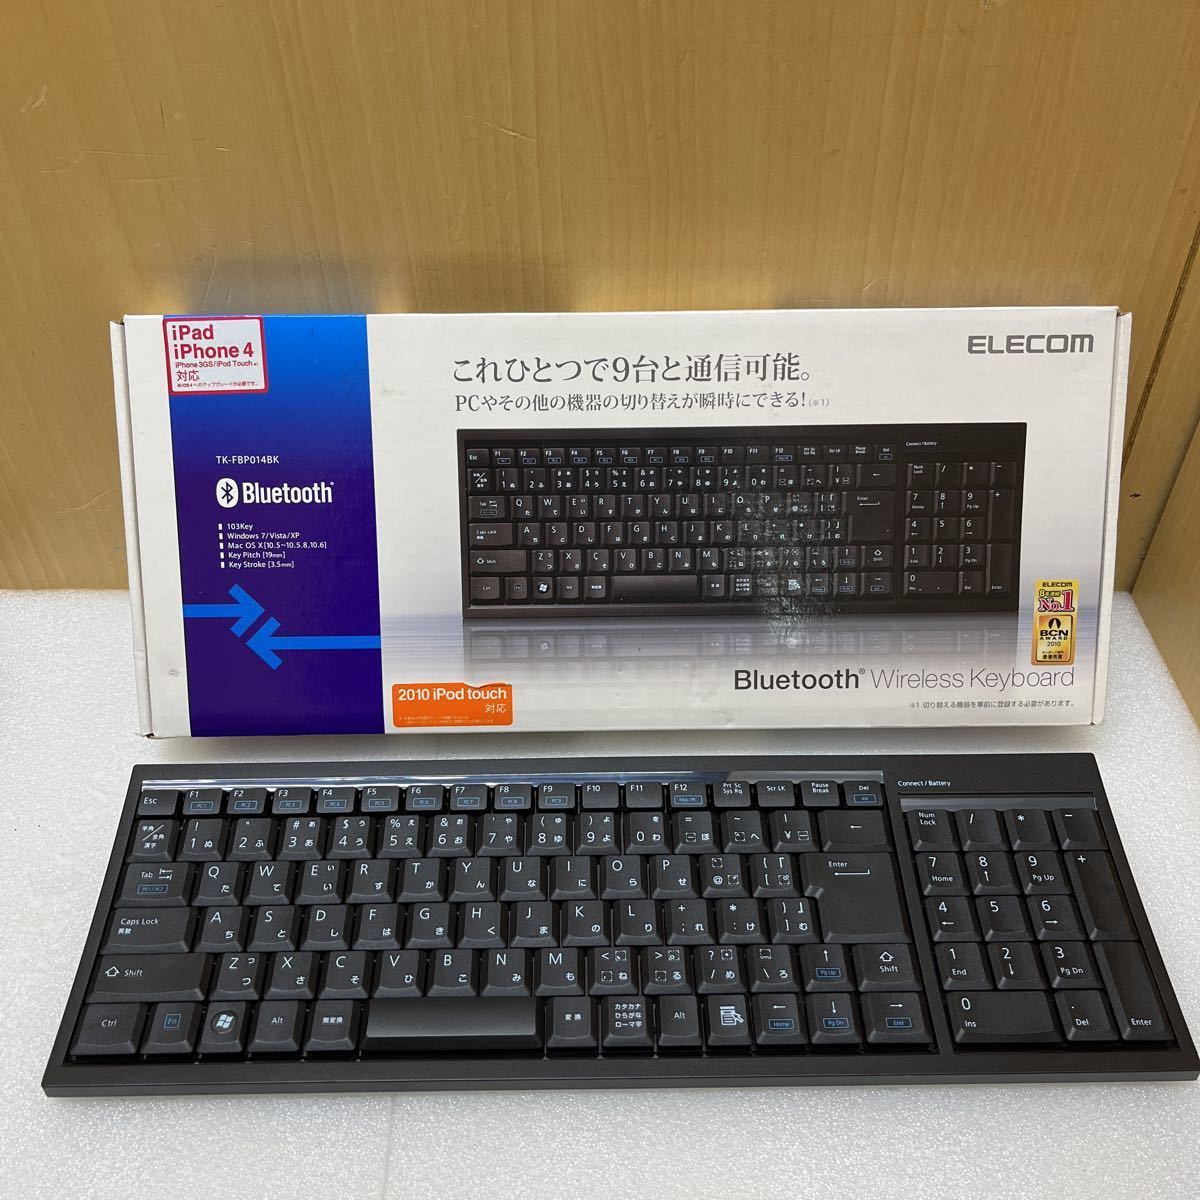 YK3910 ELECOM Elecom Bluetooth keyboard TK-FBP014 BK Bluetooth 2.0 wireless key board Japanese present condition goods 0612